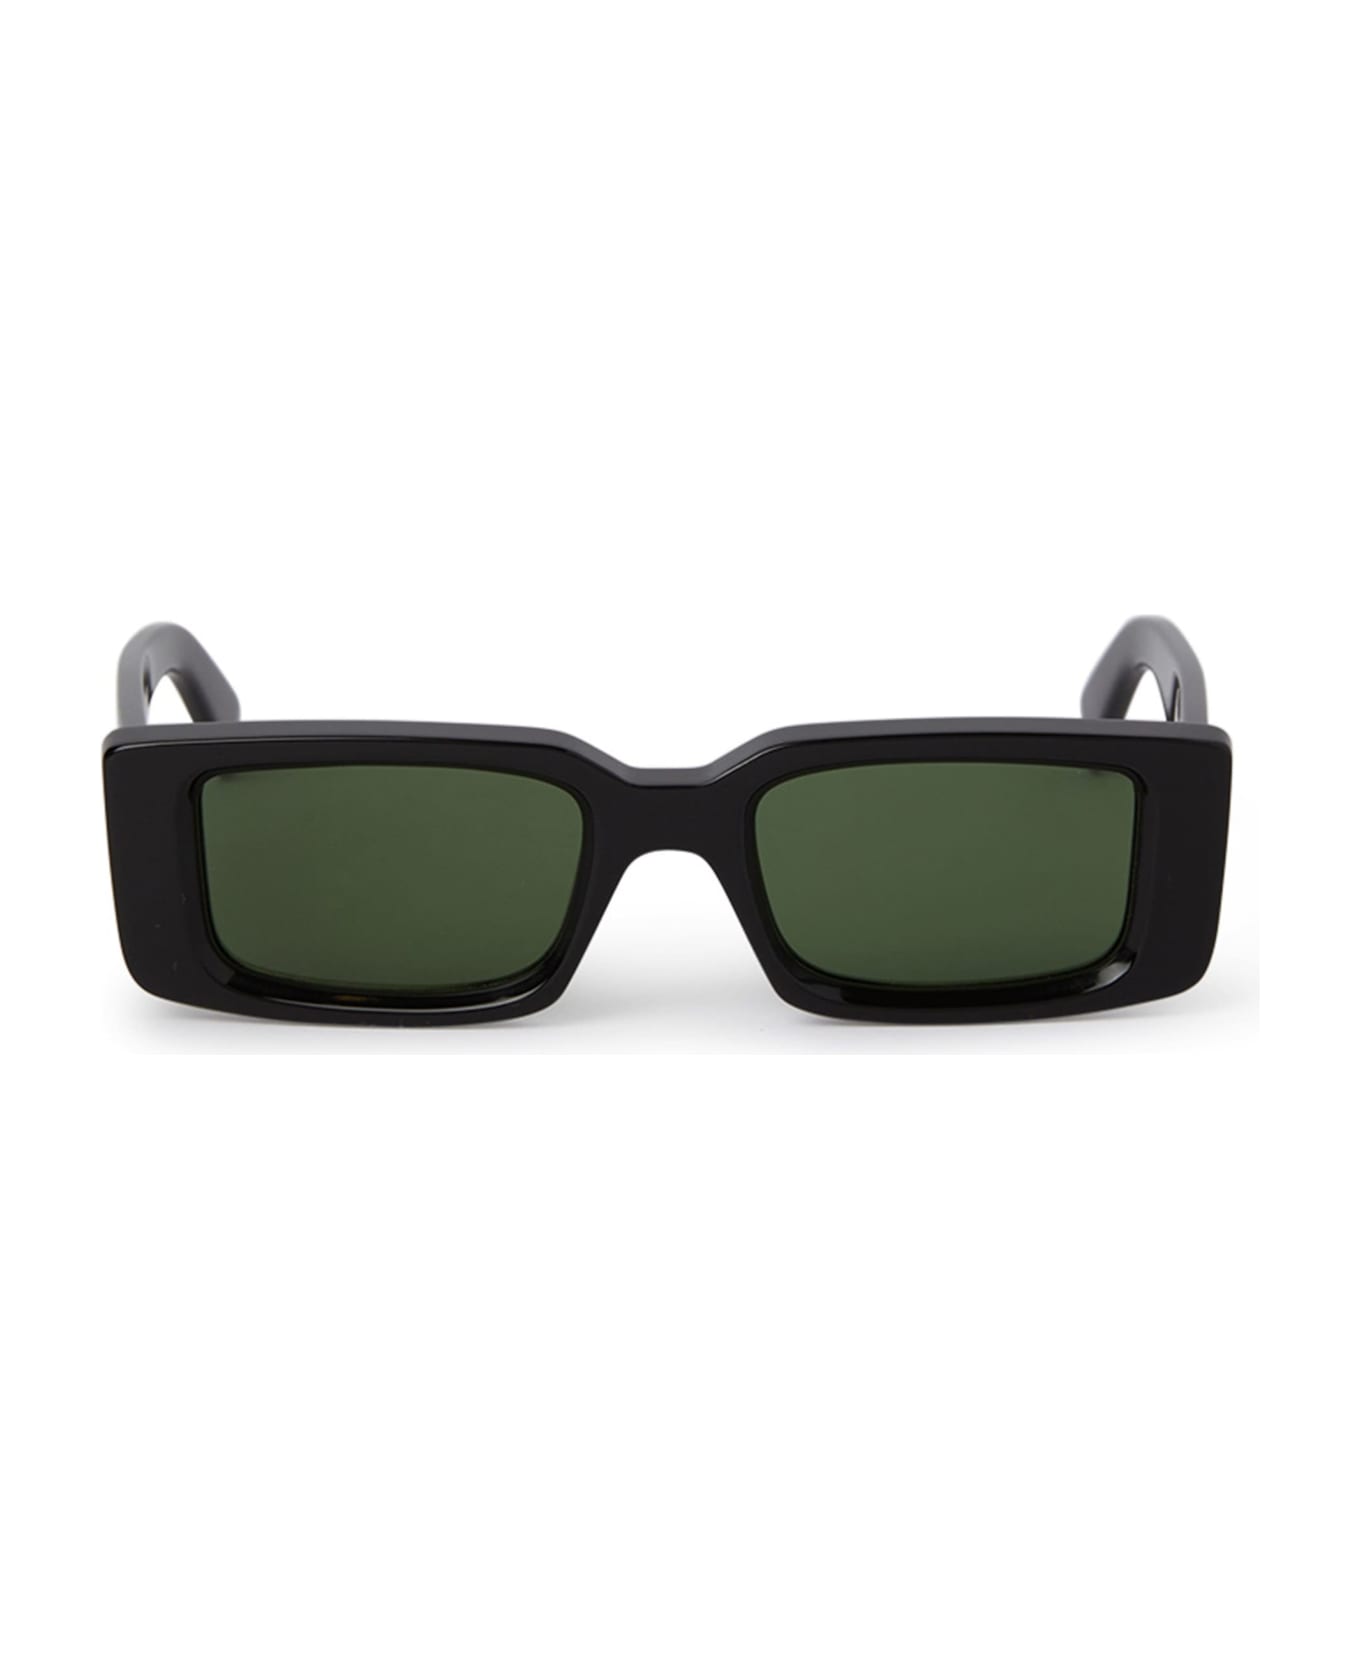 Off-White Arthur - Black / Green Sunglasses - Black